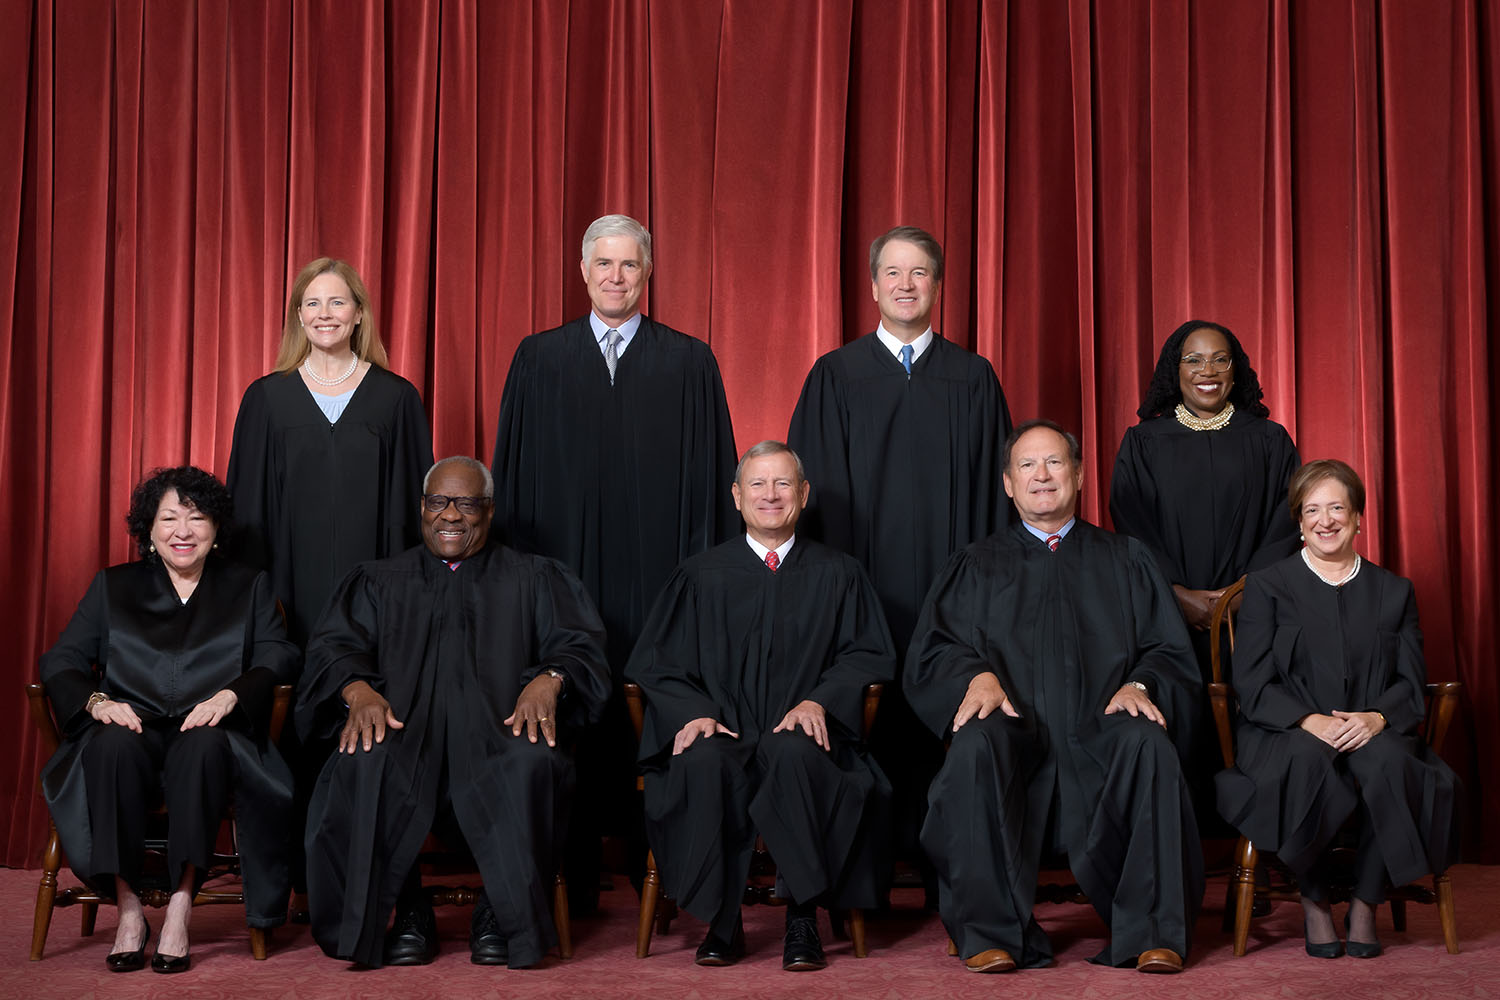 US Supreme Court adopts new ethics code